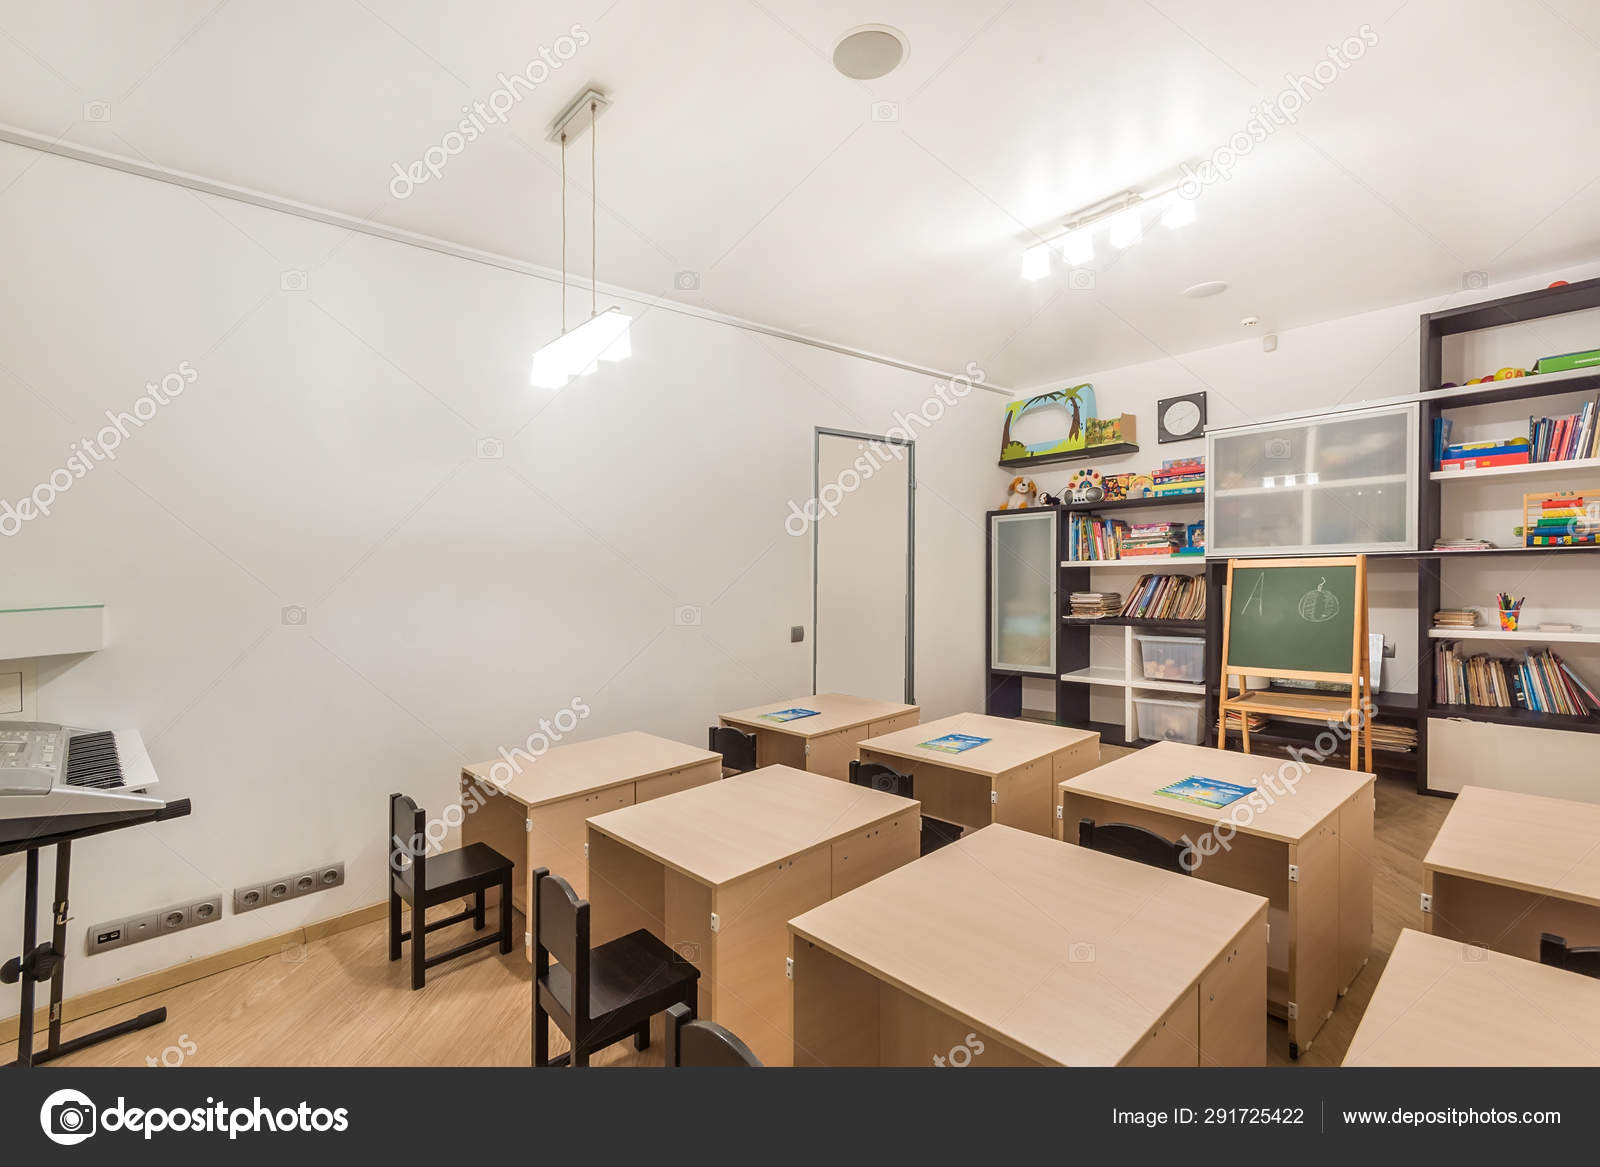 Preschool Classroom Interior Design Desks Chairs Blackboard